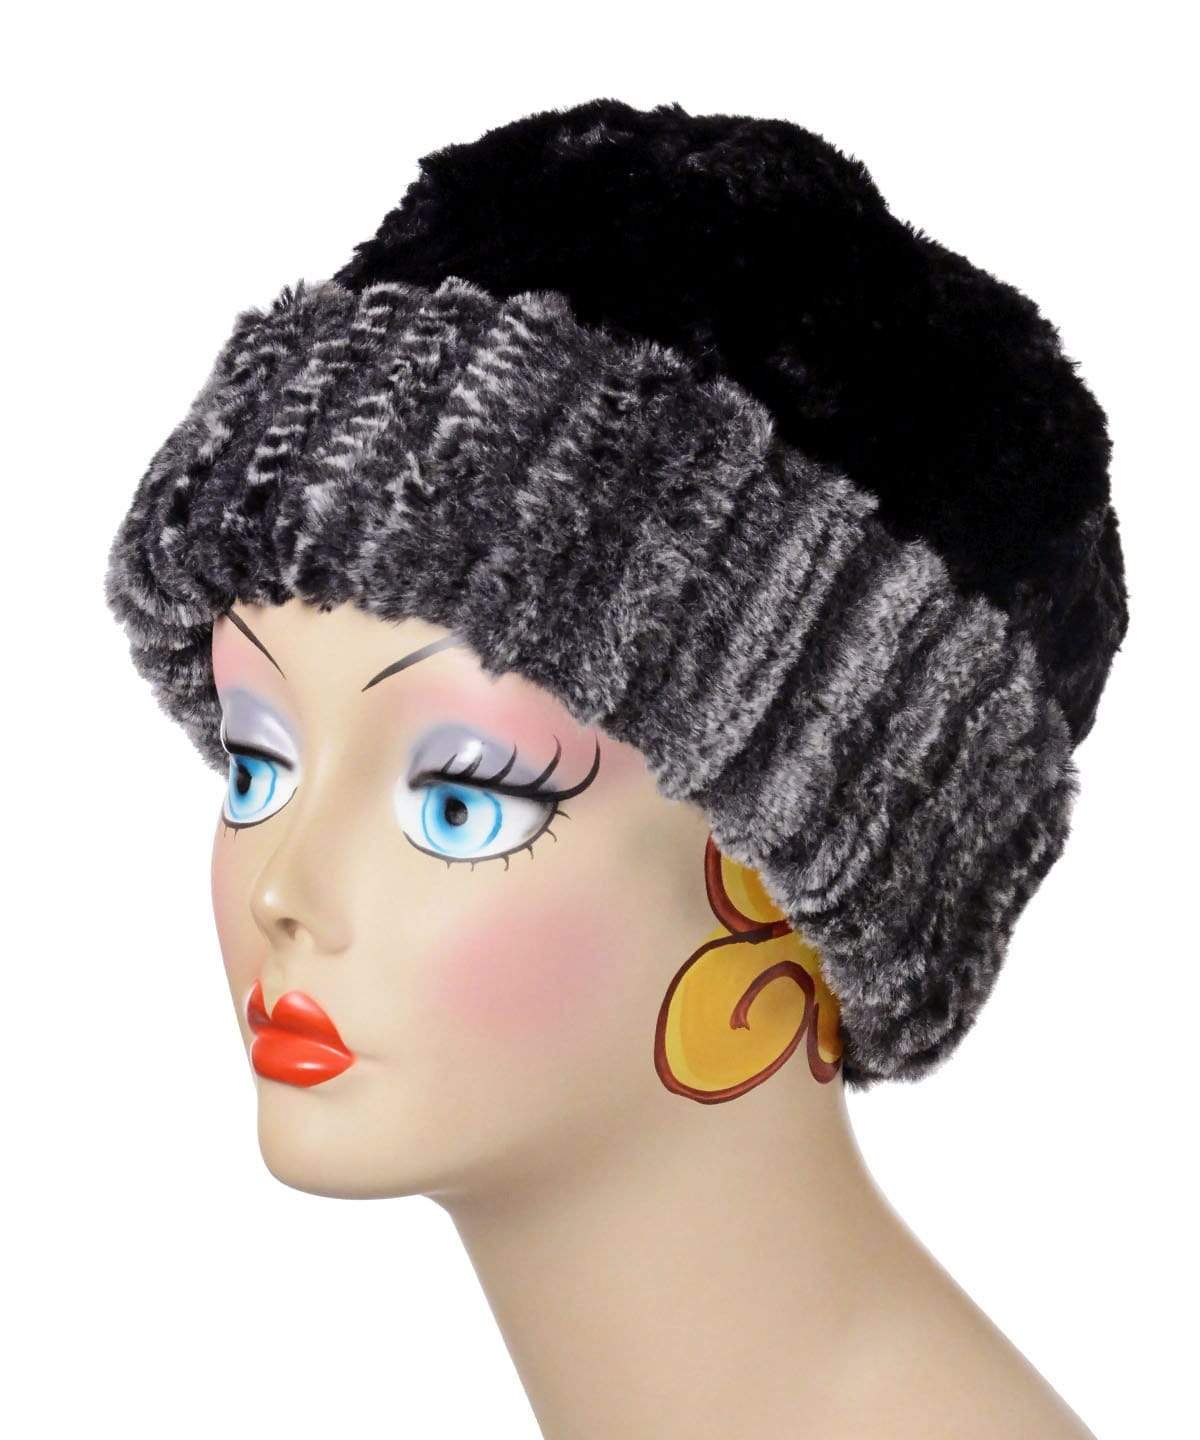 Beanie Hat, Reversible - Luxury Faux Fur in Rattle N Shake Lined in Cuddly Faux Fur in Black - By Pandemonium Millinery